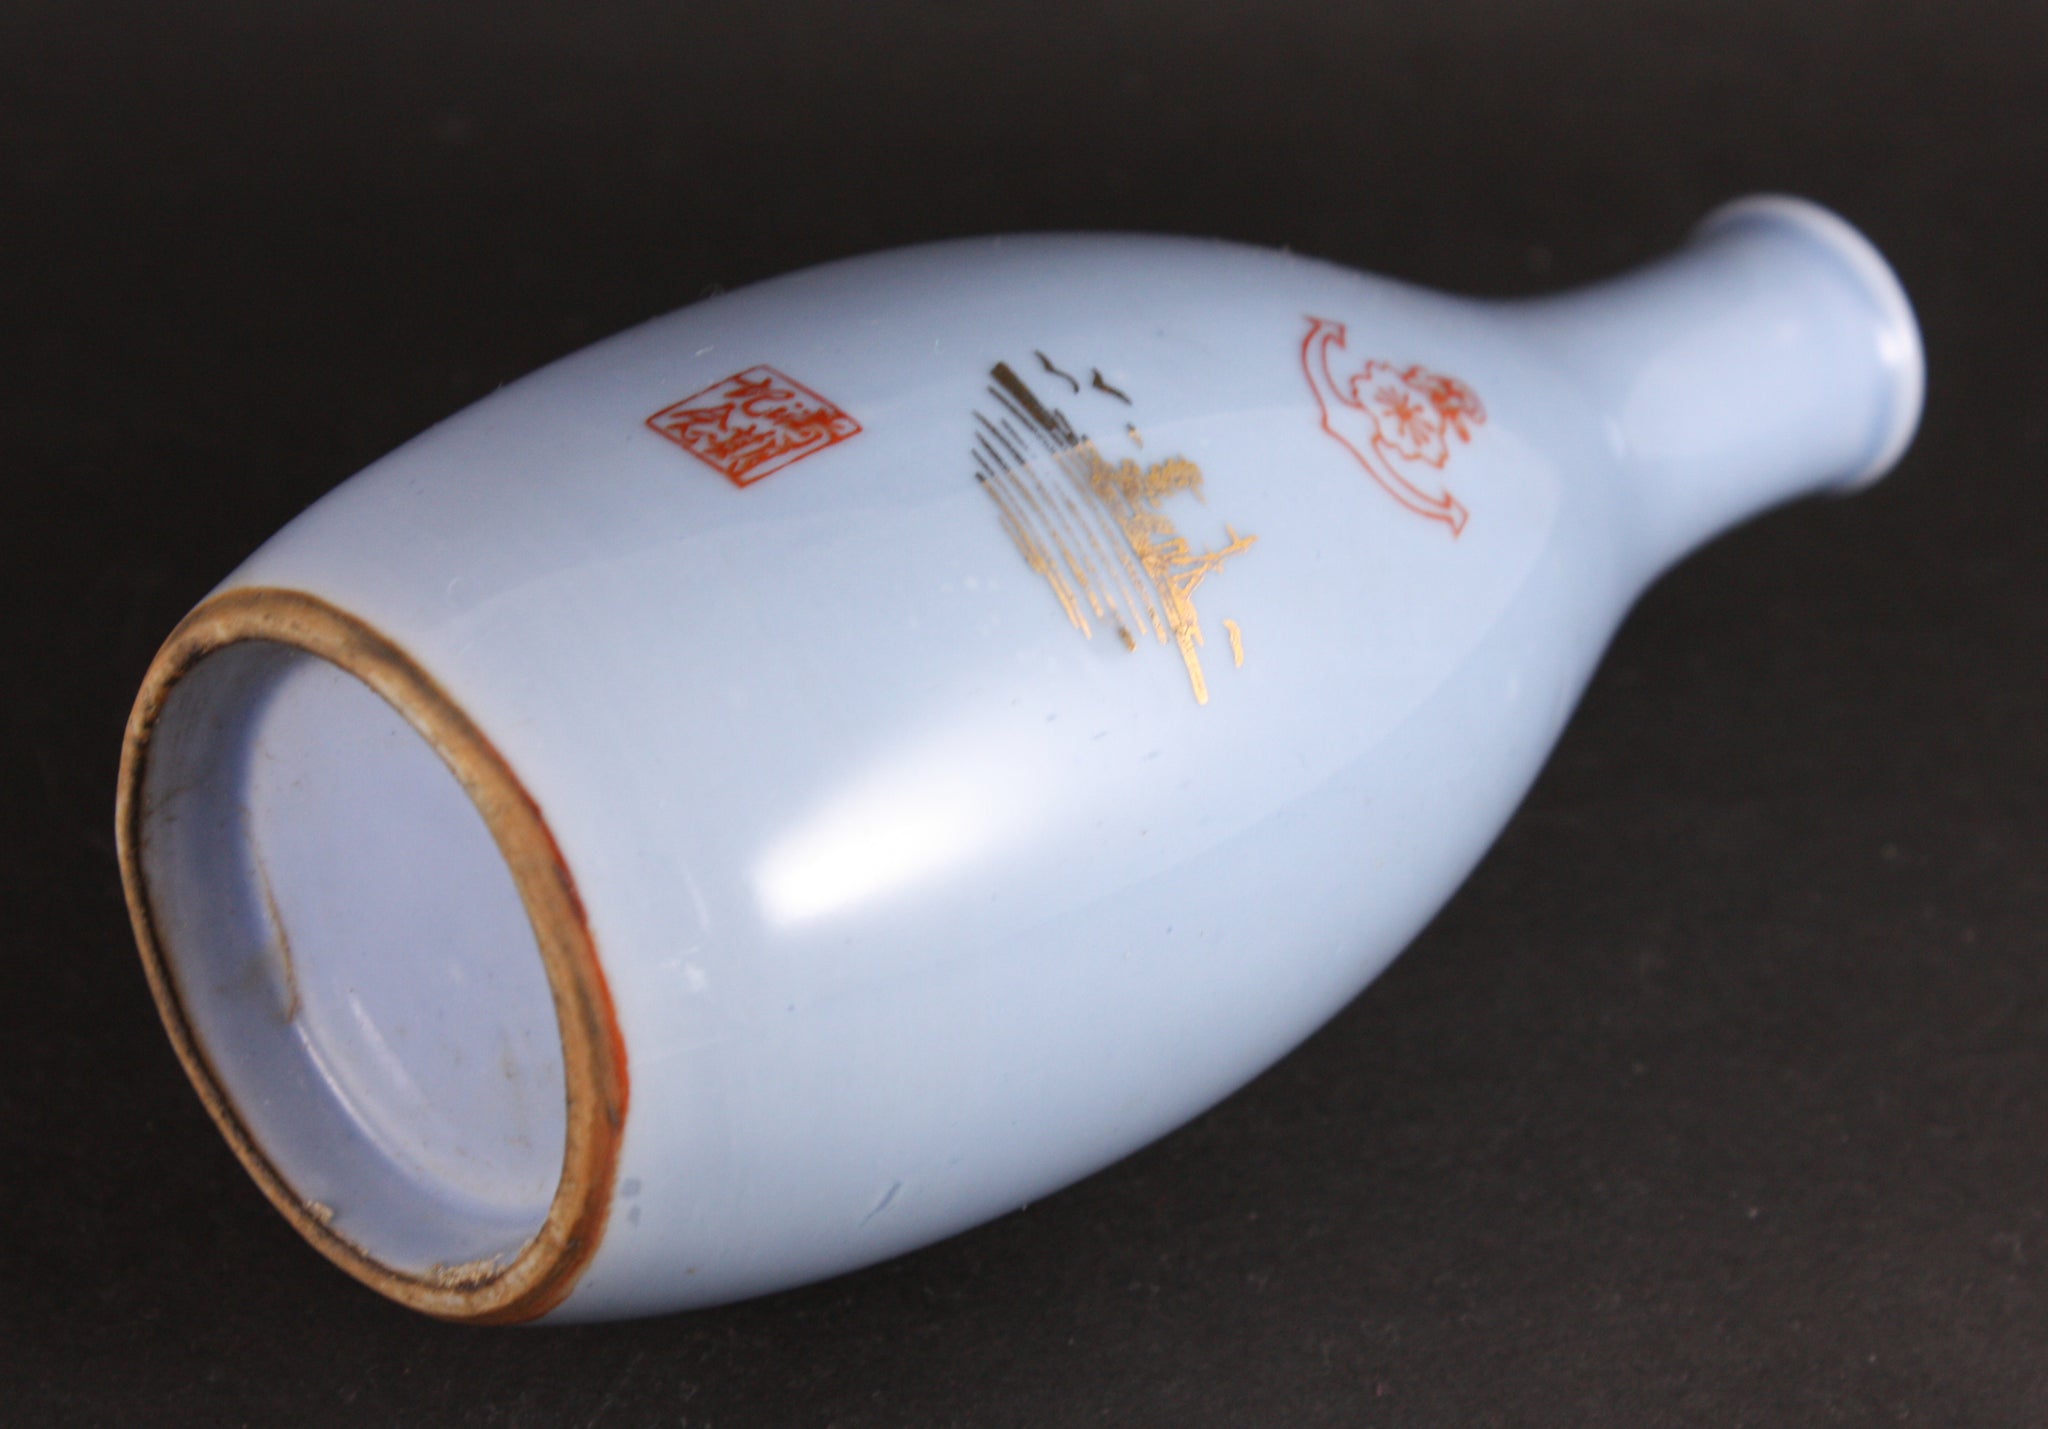 Antique Japanese Military Battleship Profile Navy Sake Bottle